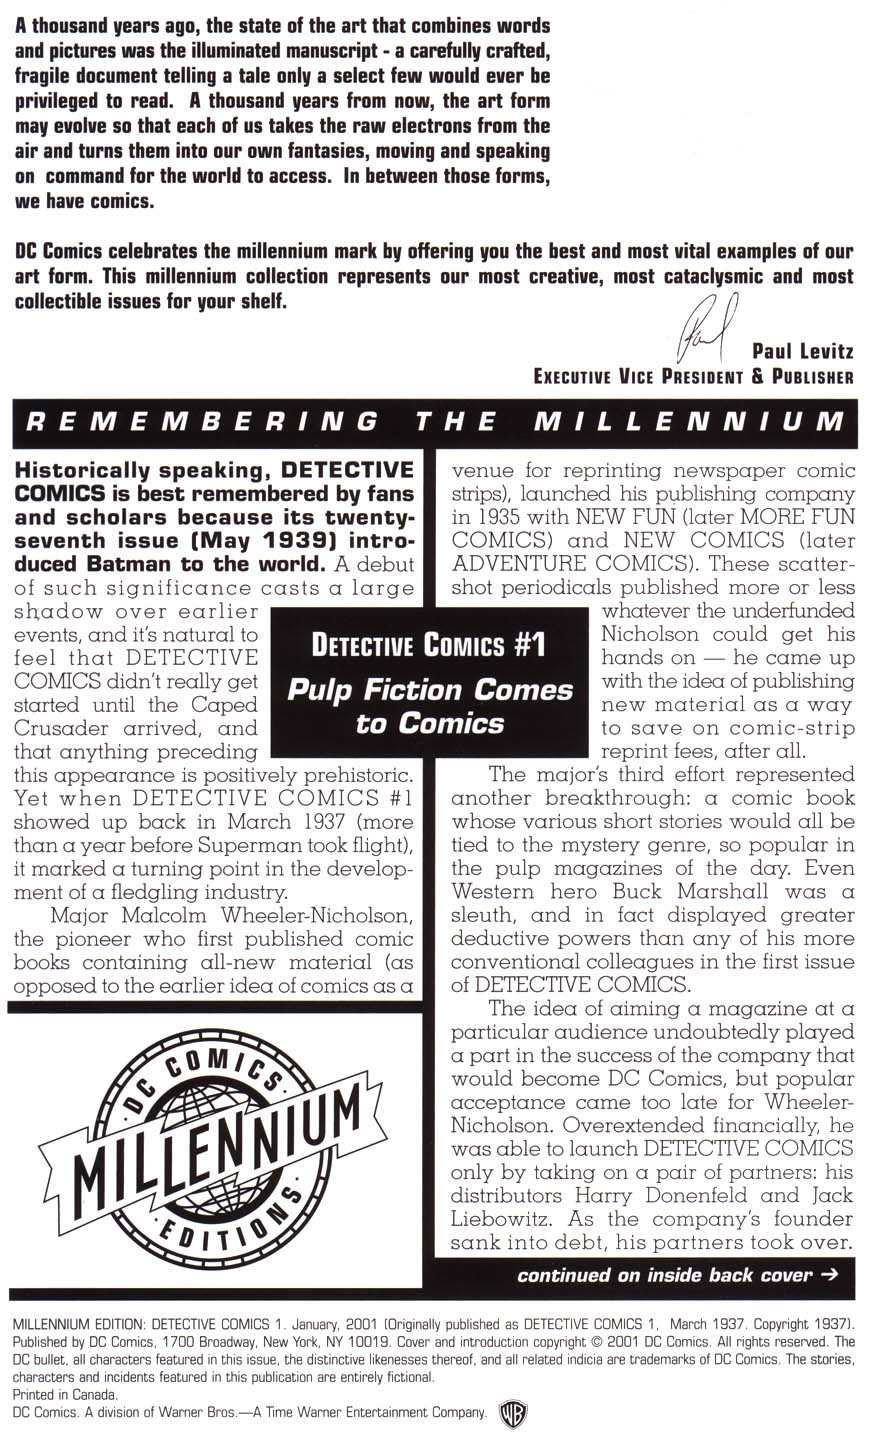 Read online Millennium Edition: Detective Comics 1 comic -  Issue # Full - 3